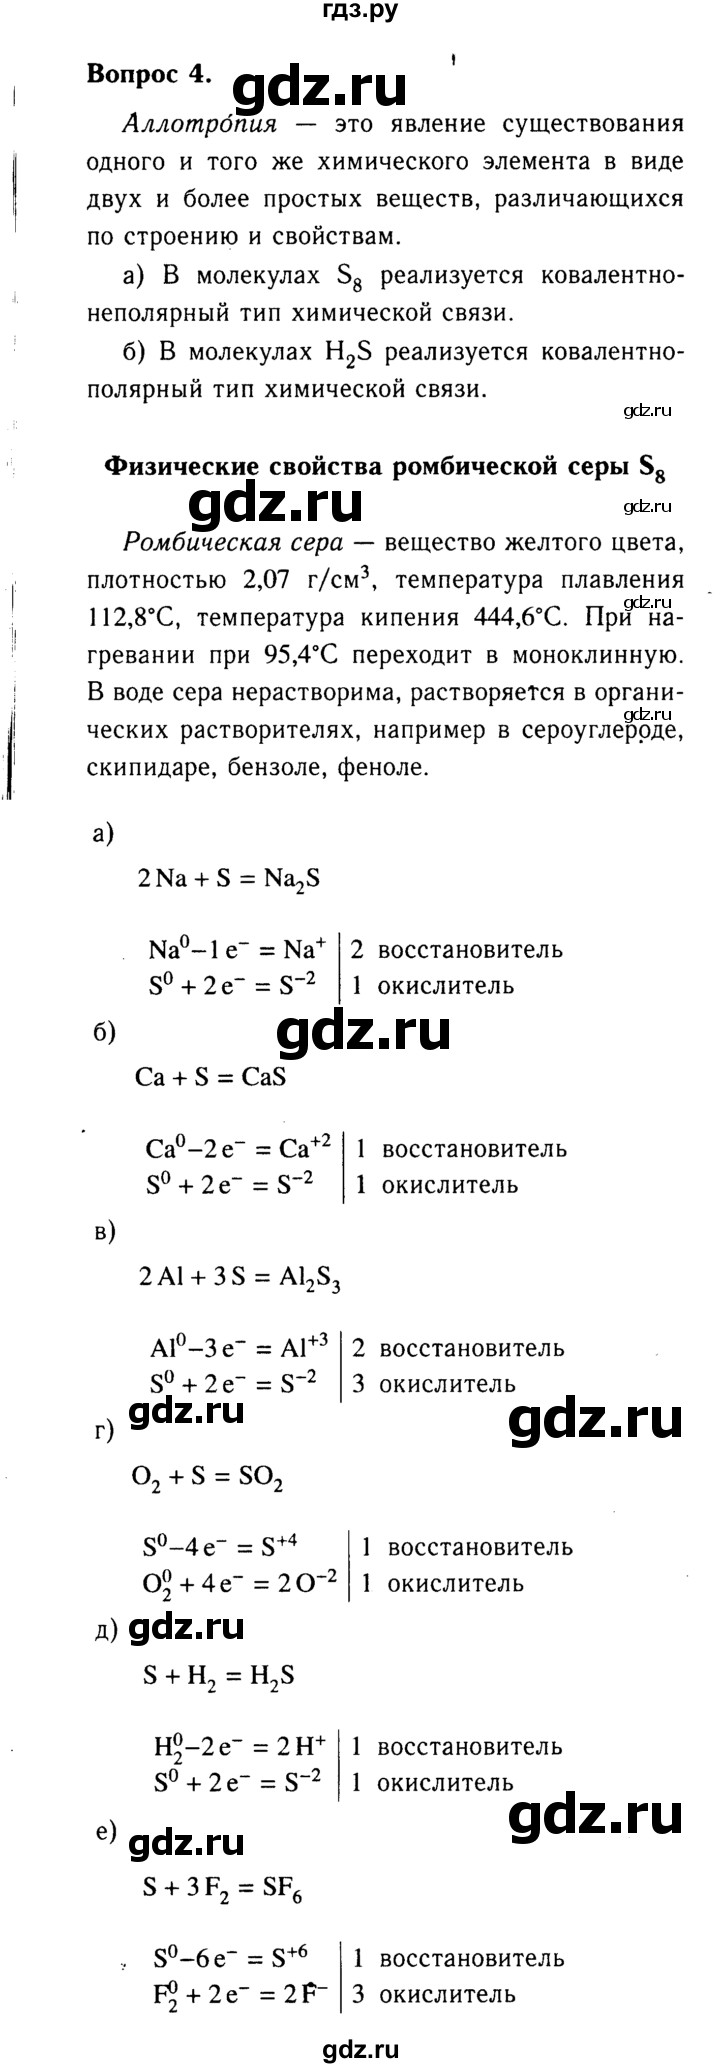 ГДЗ по химии 9 класс  Габриелян   §1 - 4, Решебник №3